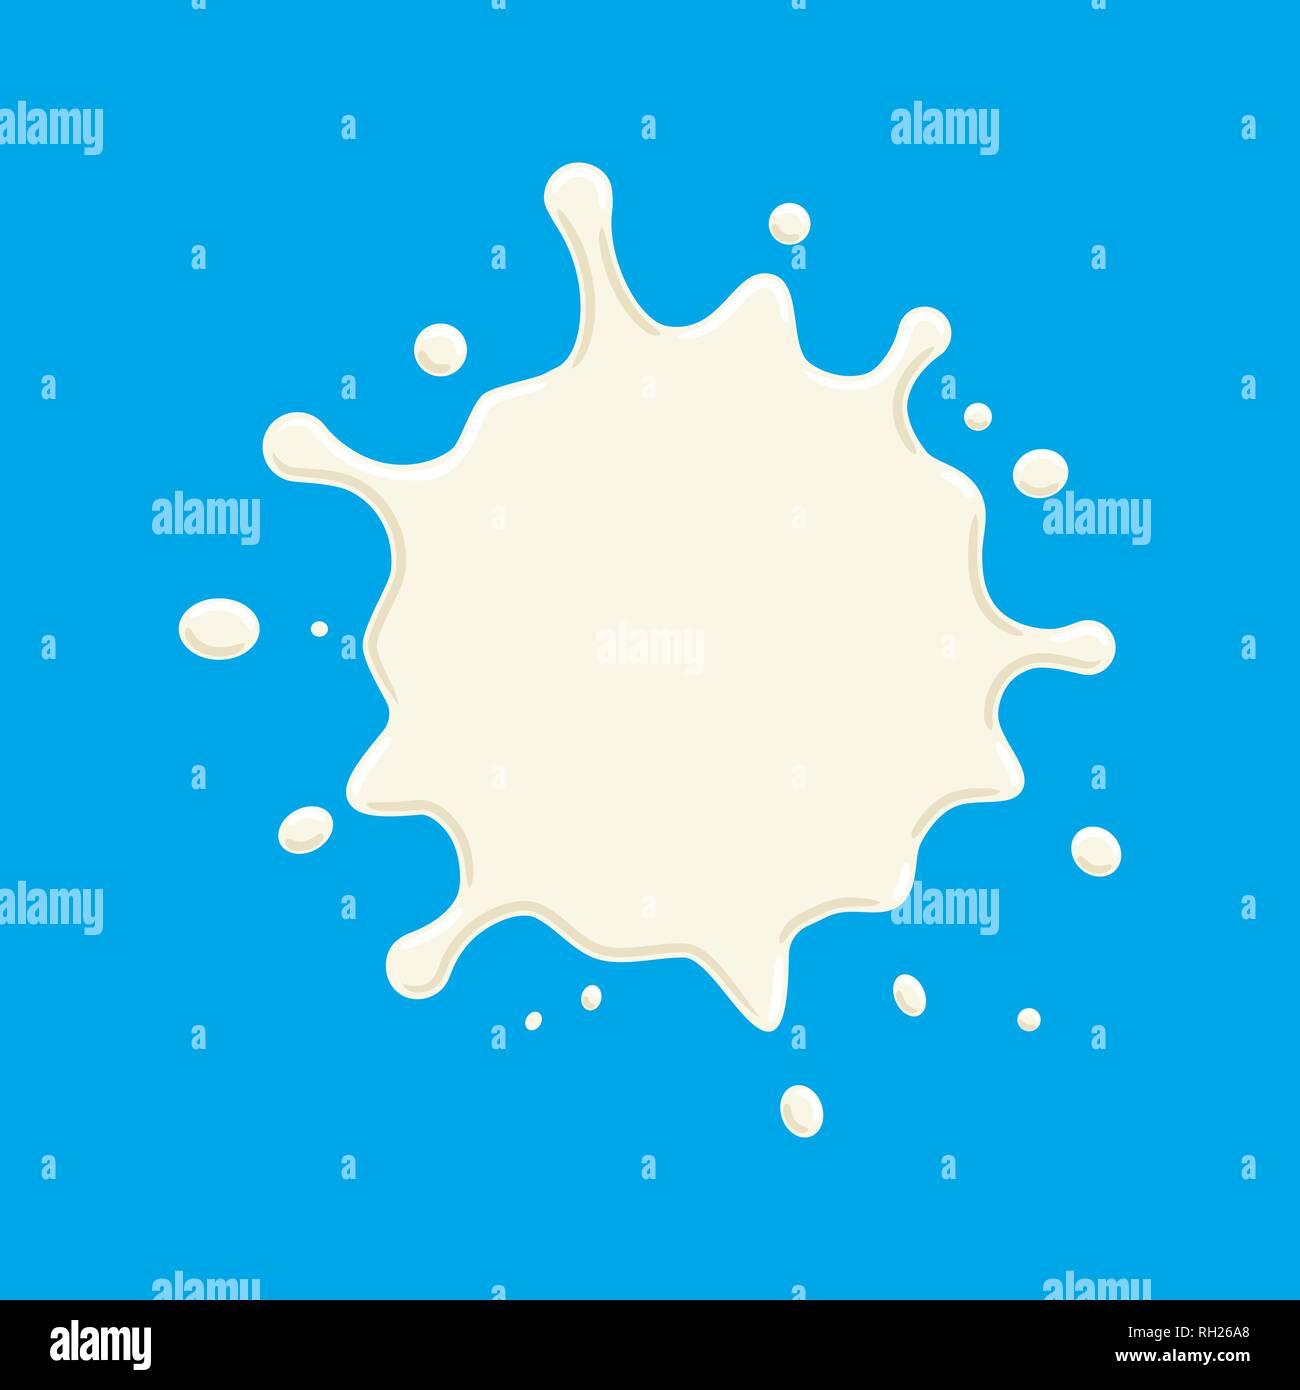 milk label vector. Milk splash and blot design, shape creative illustration. Stock Vector